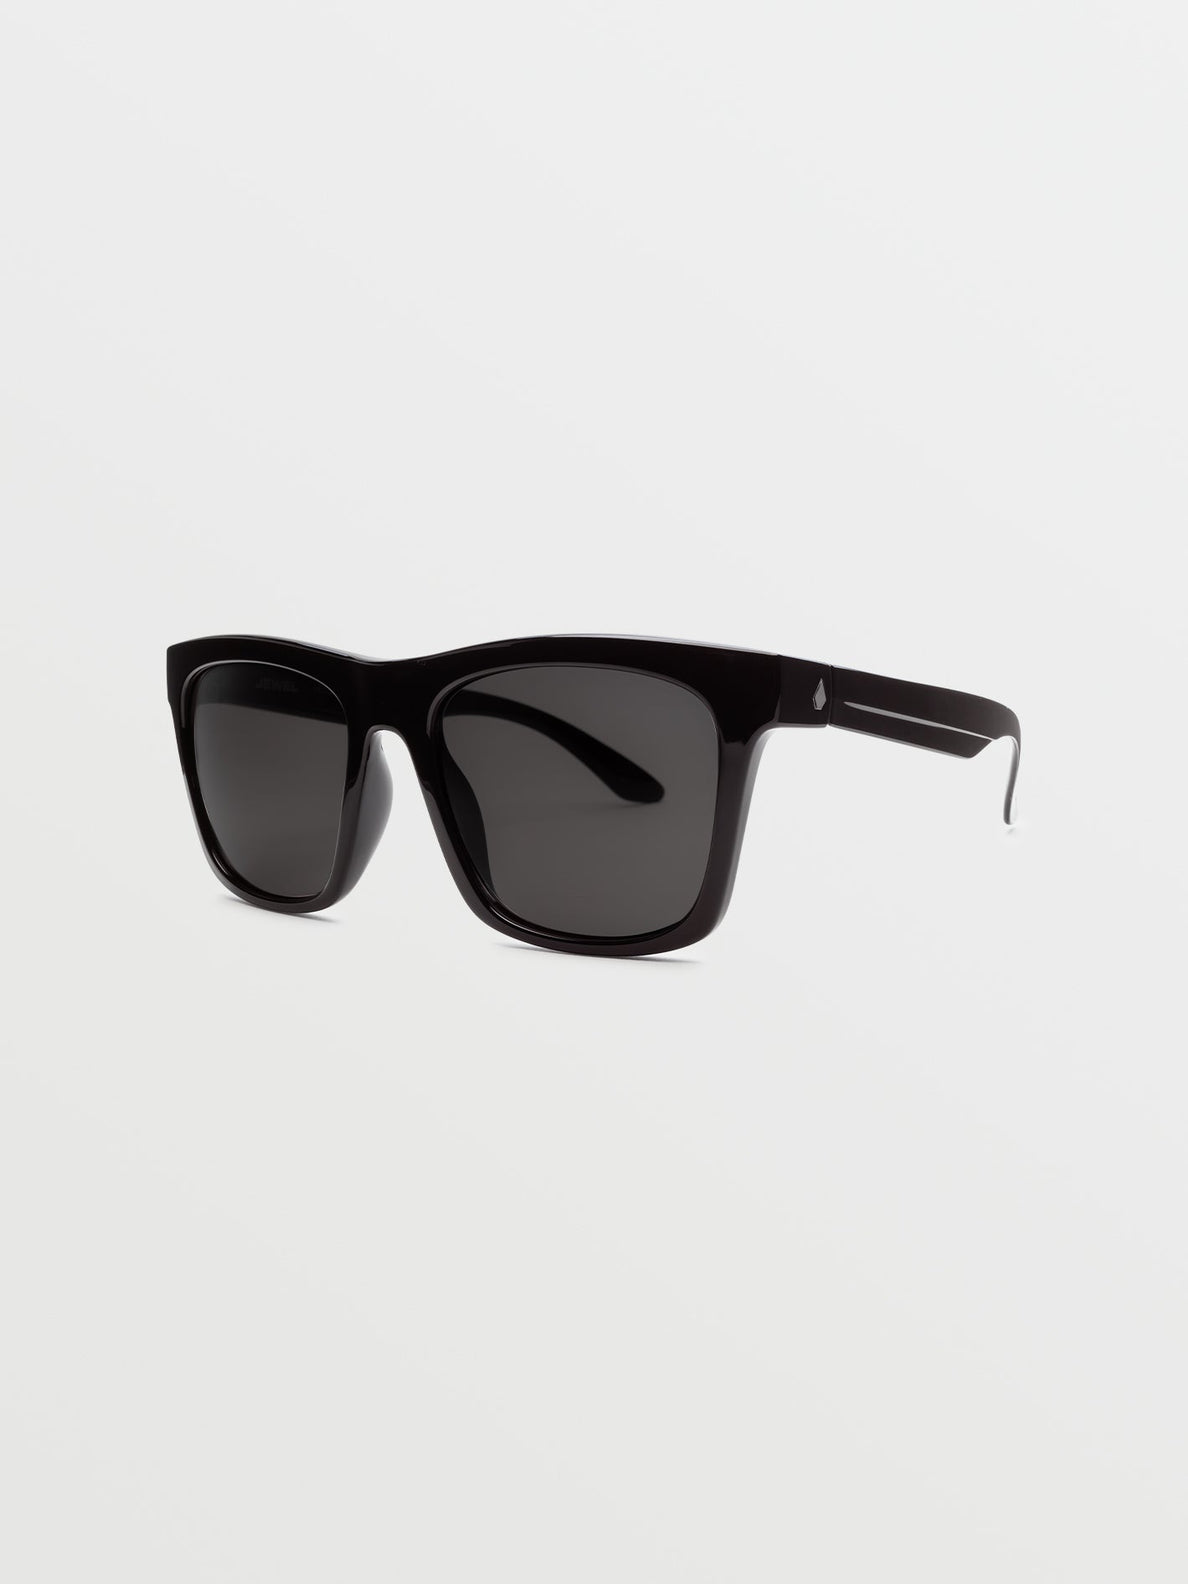 Jewel Gloss Black Sunglasses (Gray Lens) - GRAY (VE02500201_0000) [B]